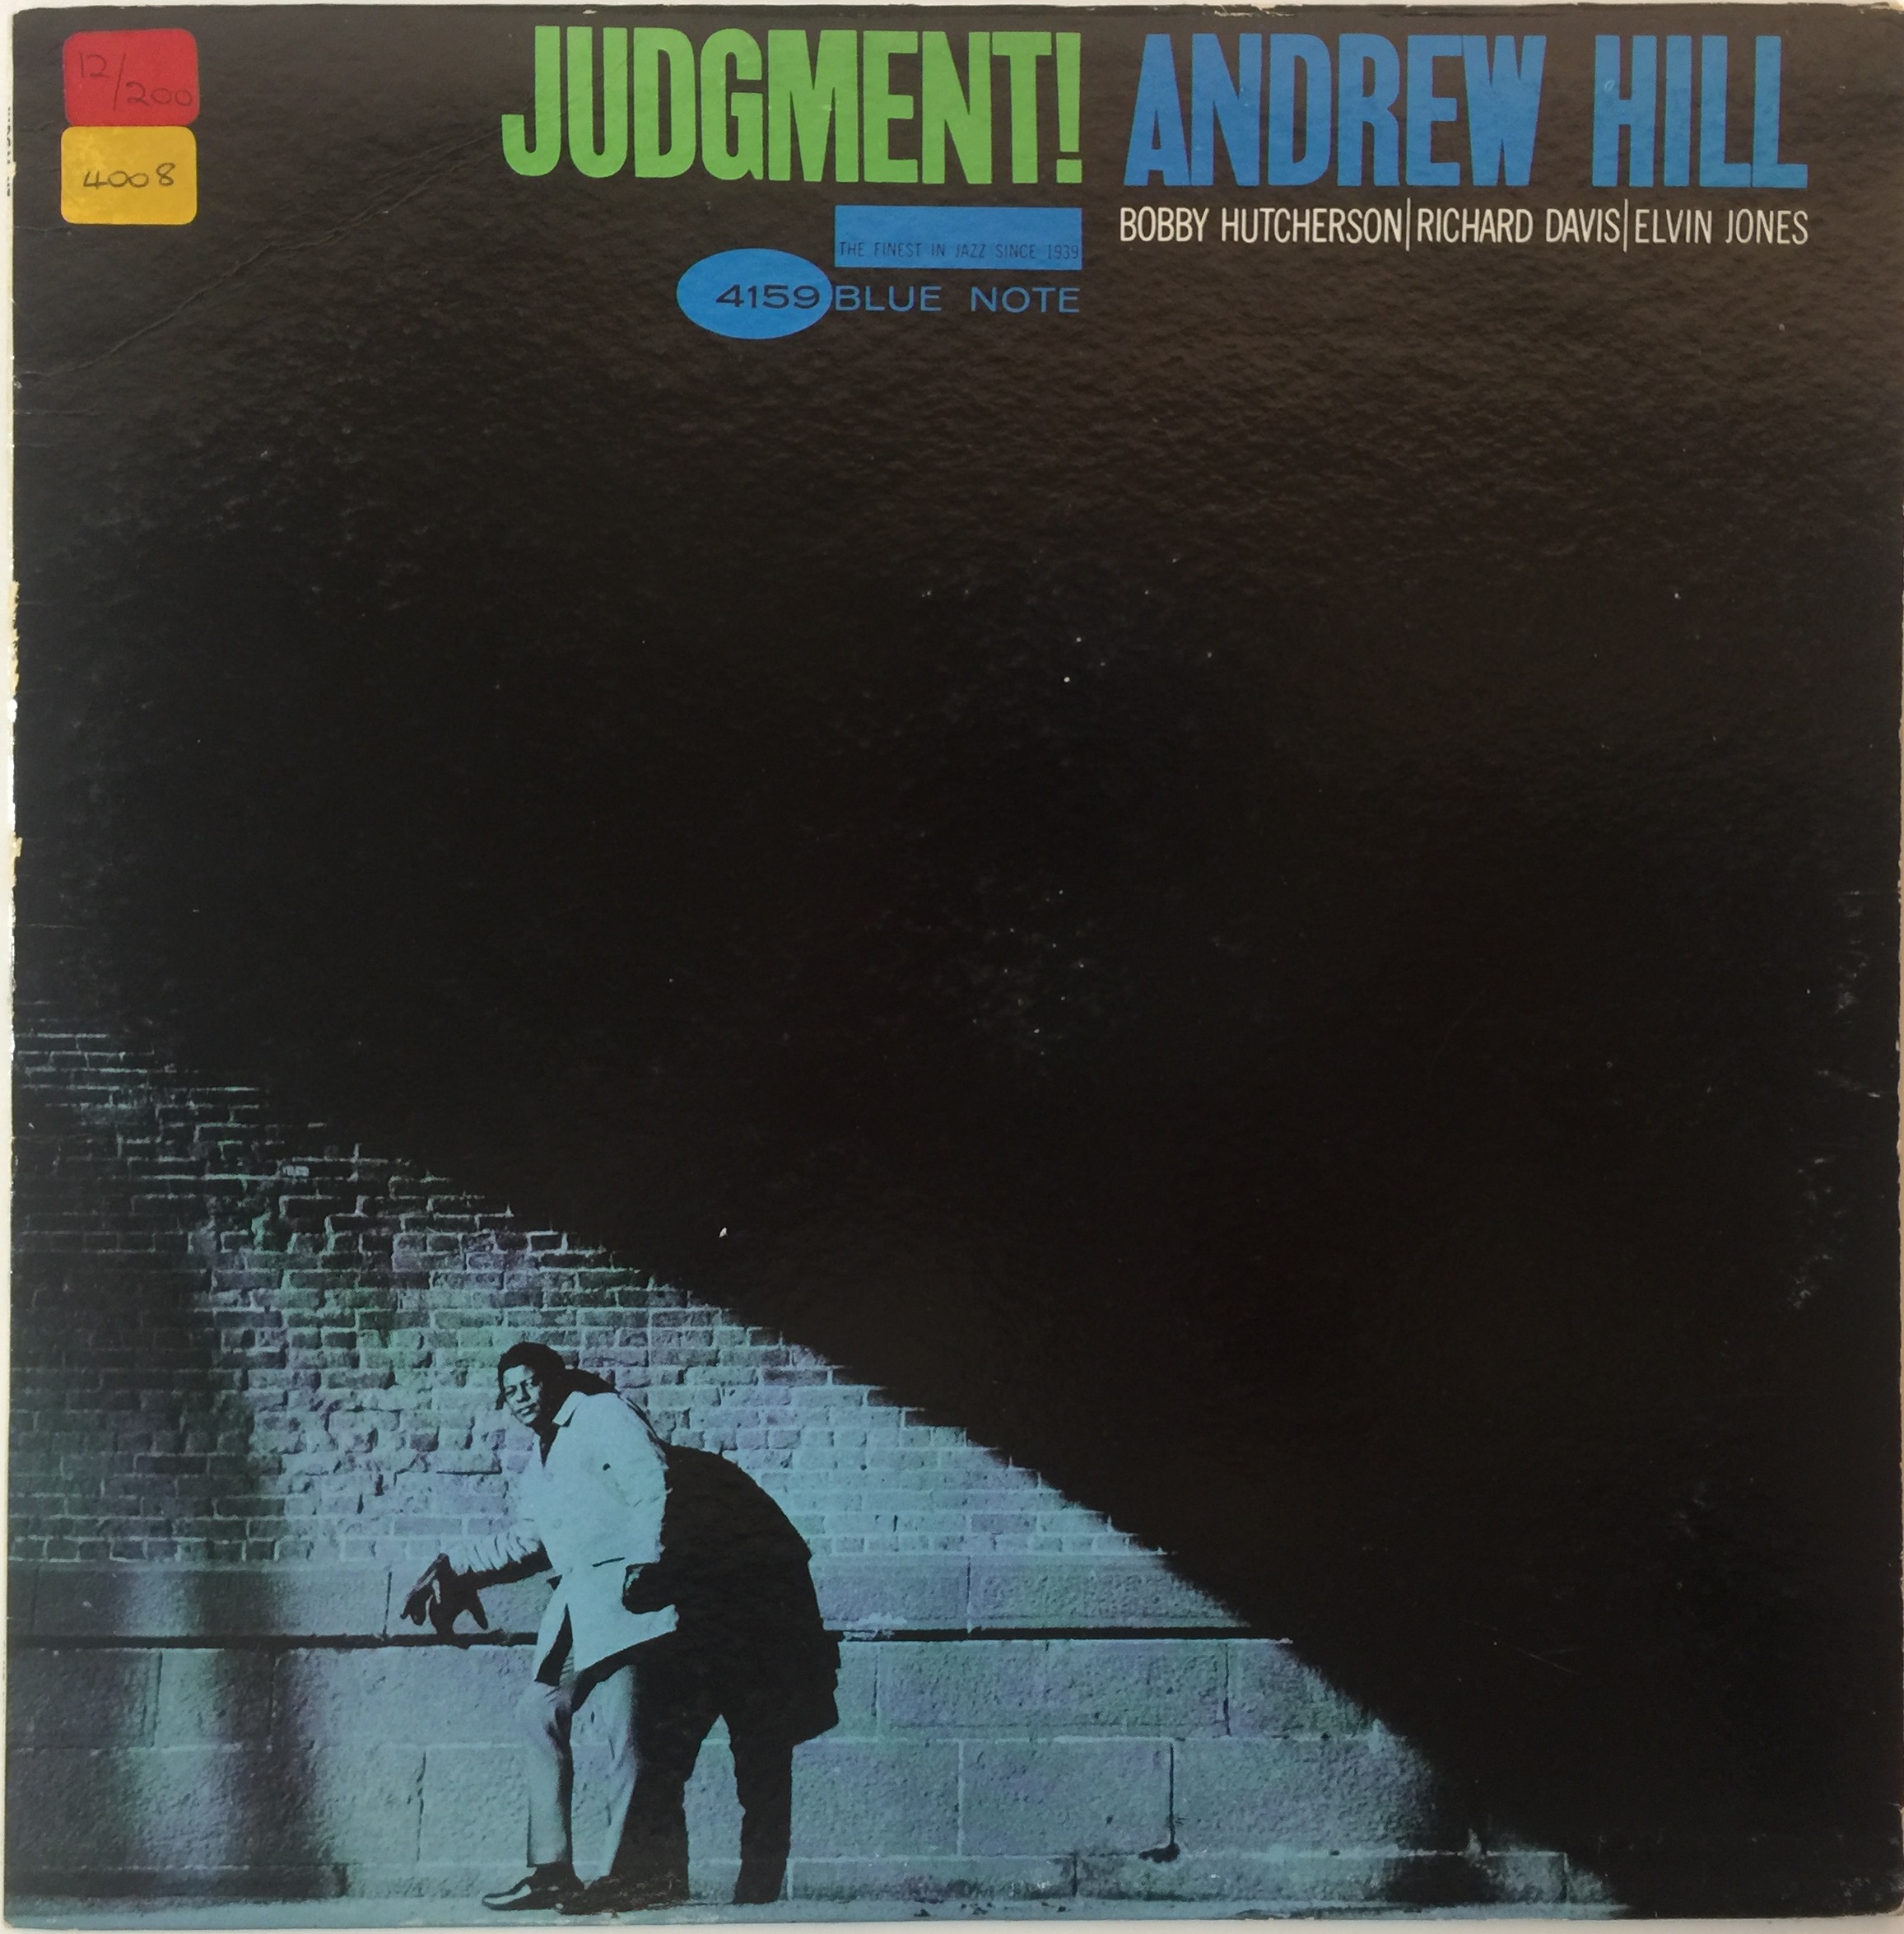 ANDREW HILL - JUDGMENT LP (BLUE NOTE ORIGINAL US PRESSING - BLP 4159).